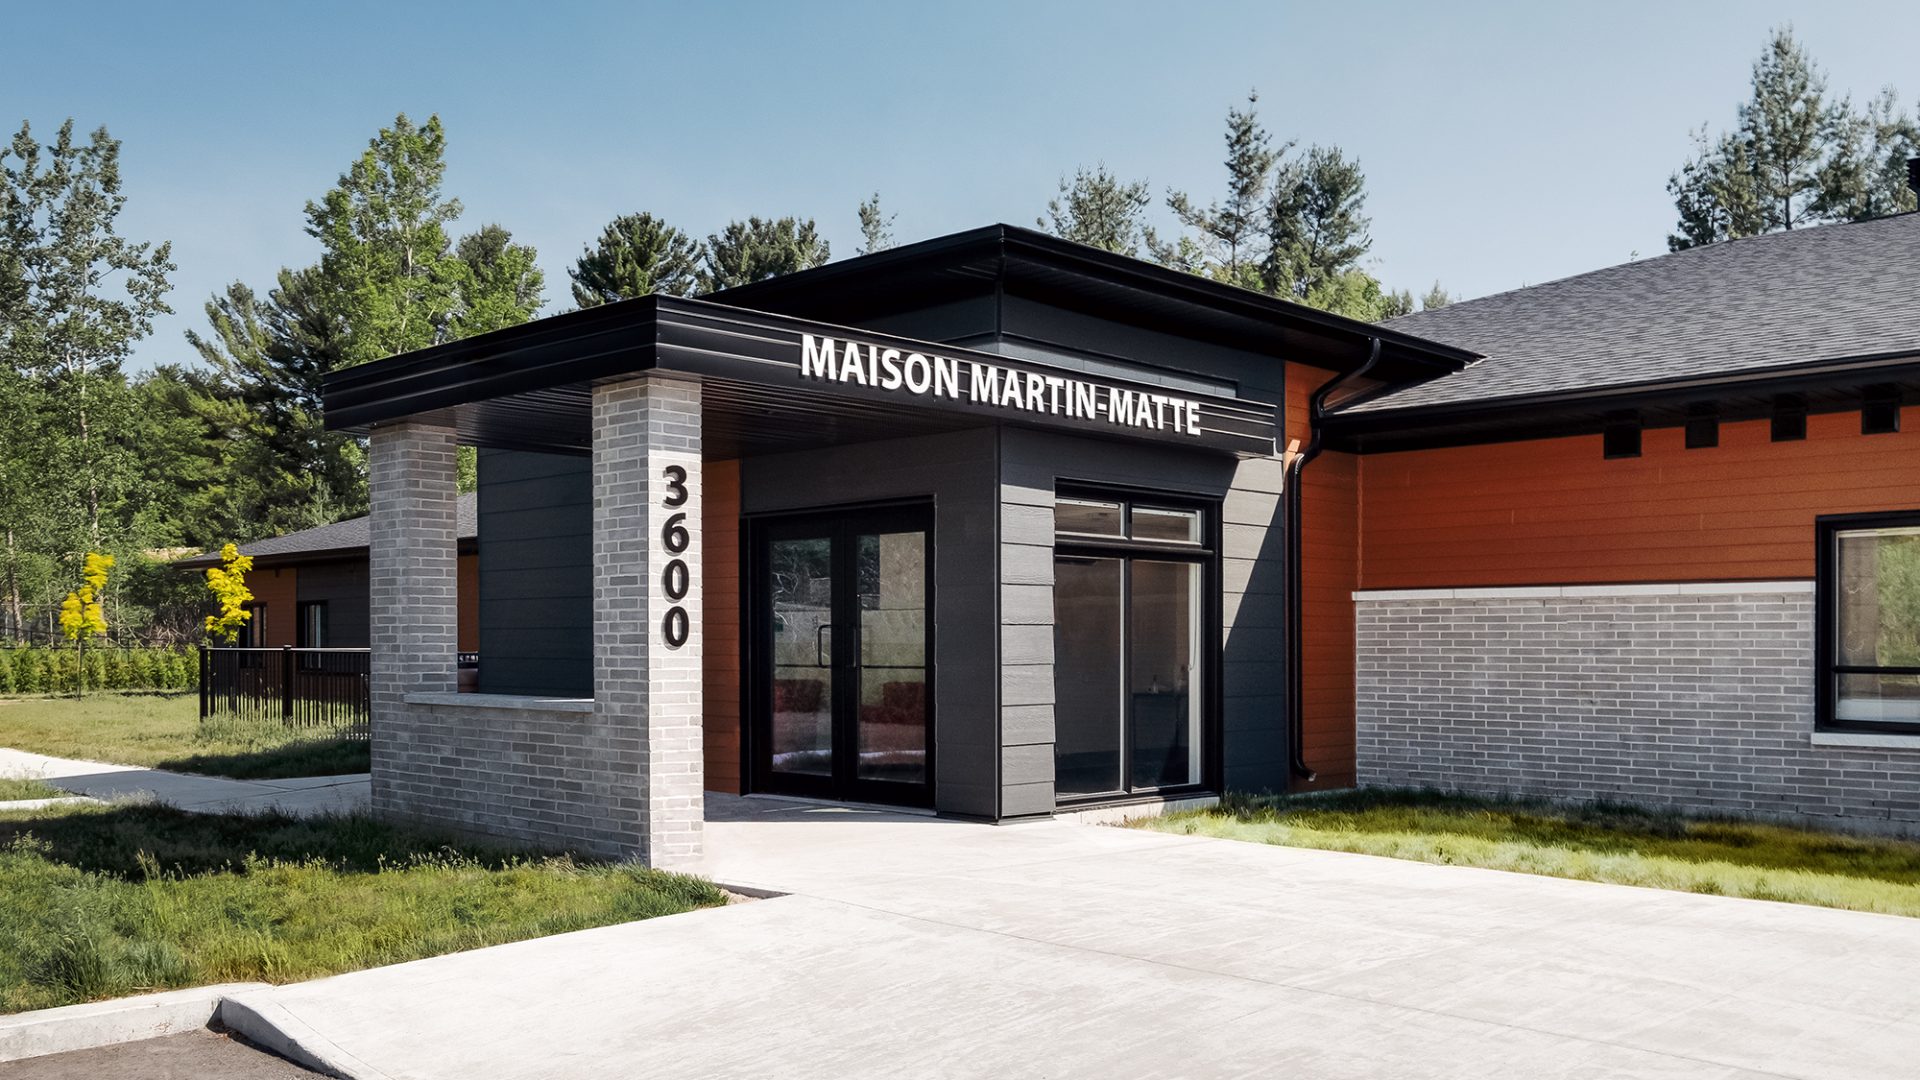 Maison Martin-Matte